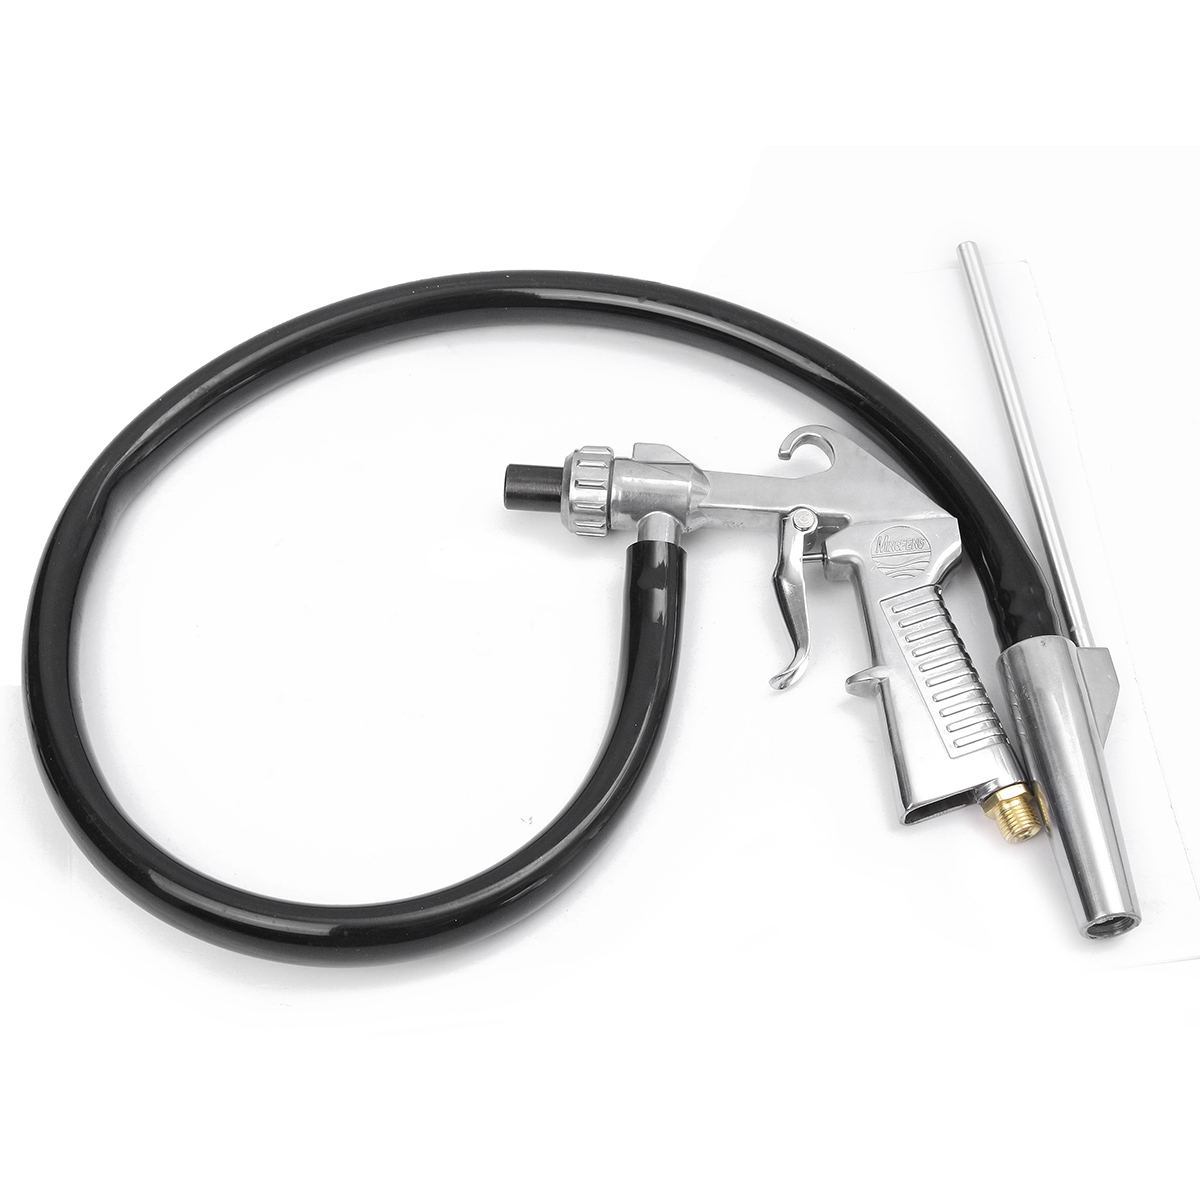 Sand-Blaste-Sandblasting-Kit-amp-Nozzle-Quick-Connector-Glass-Derusting-Tools-1308705